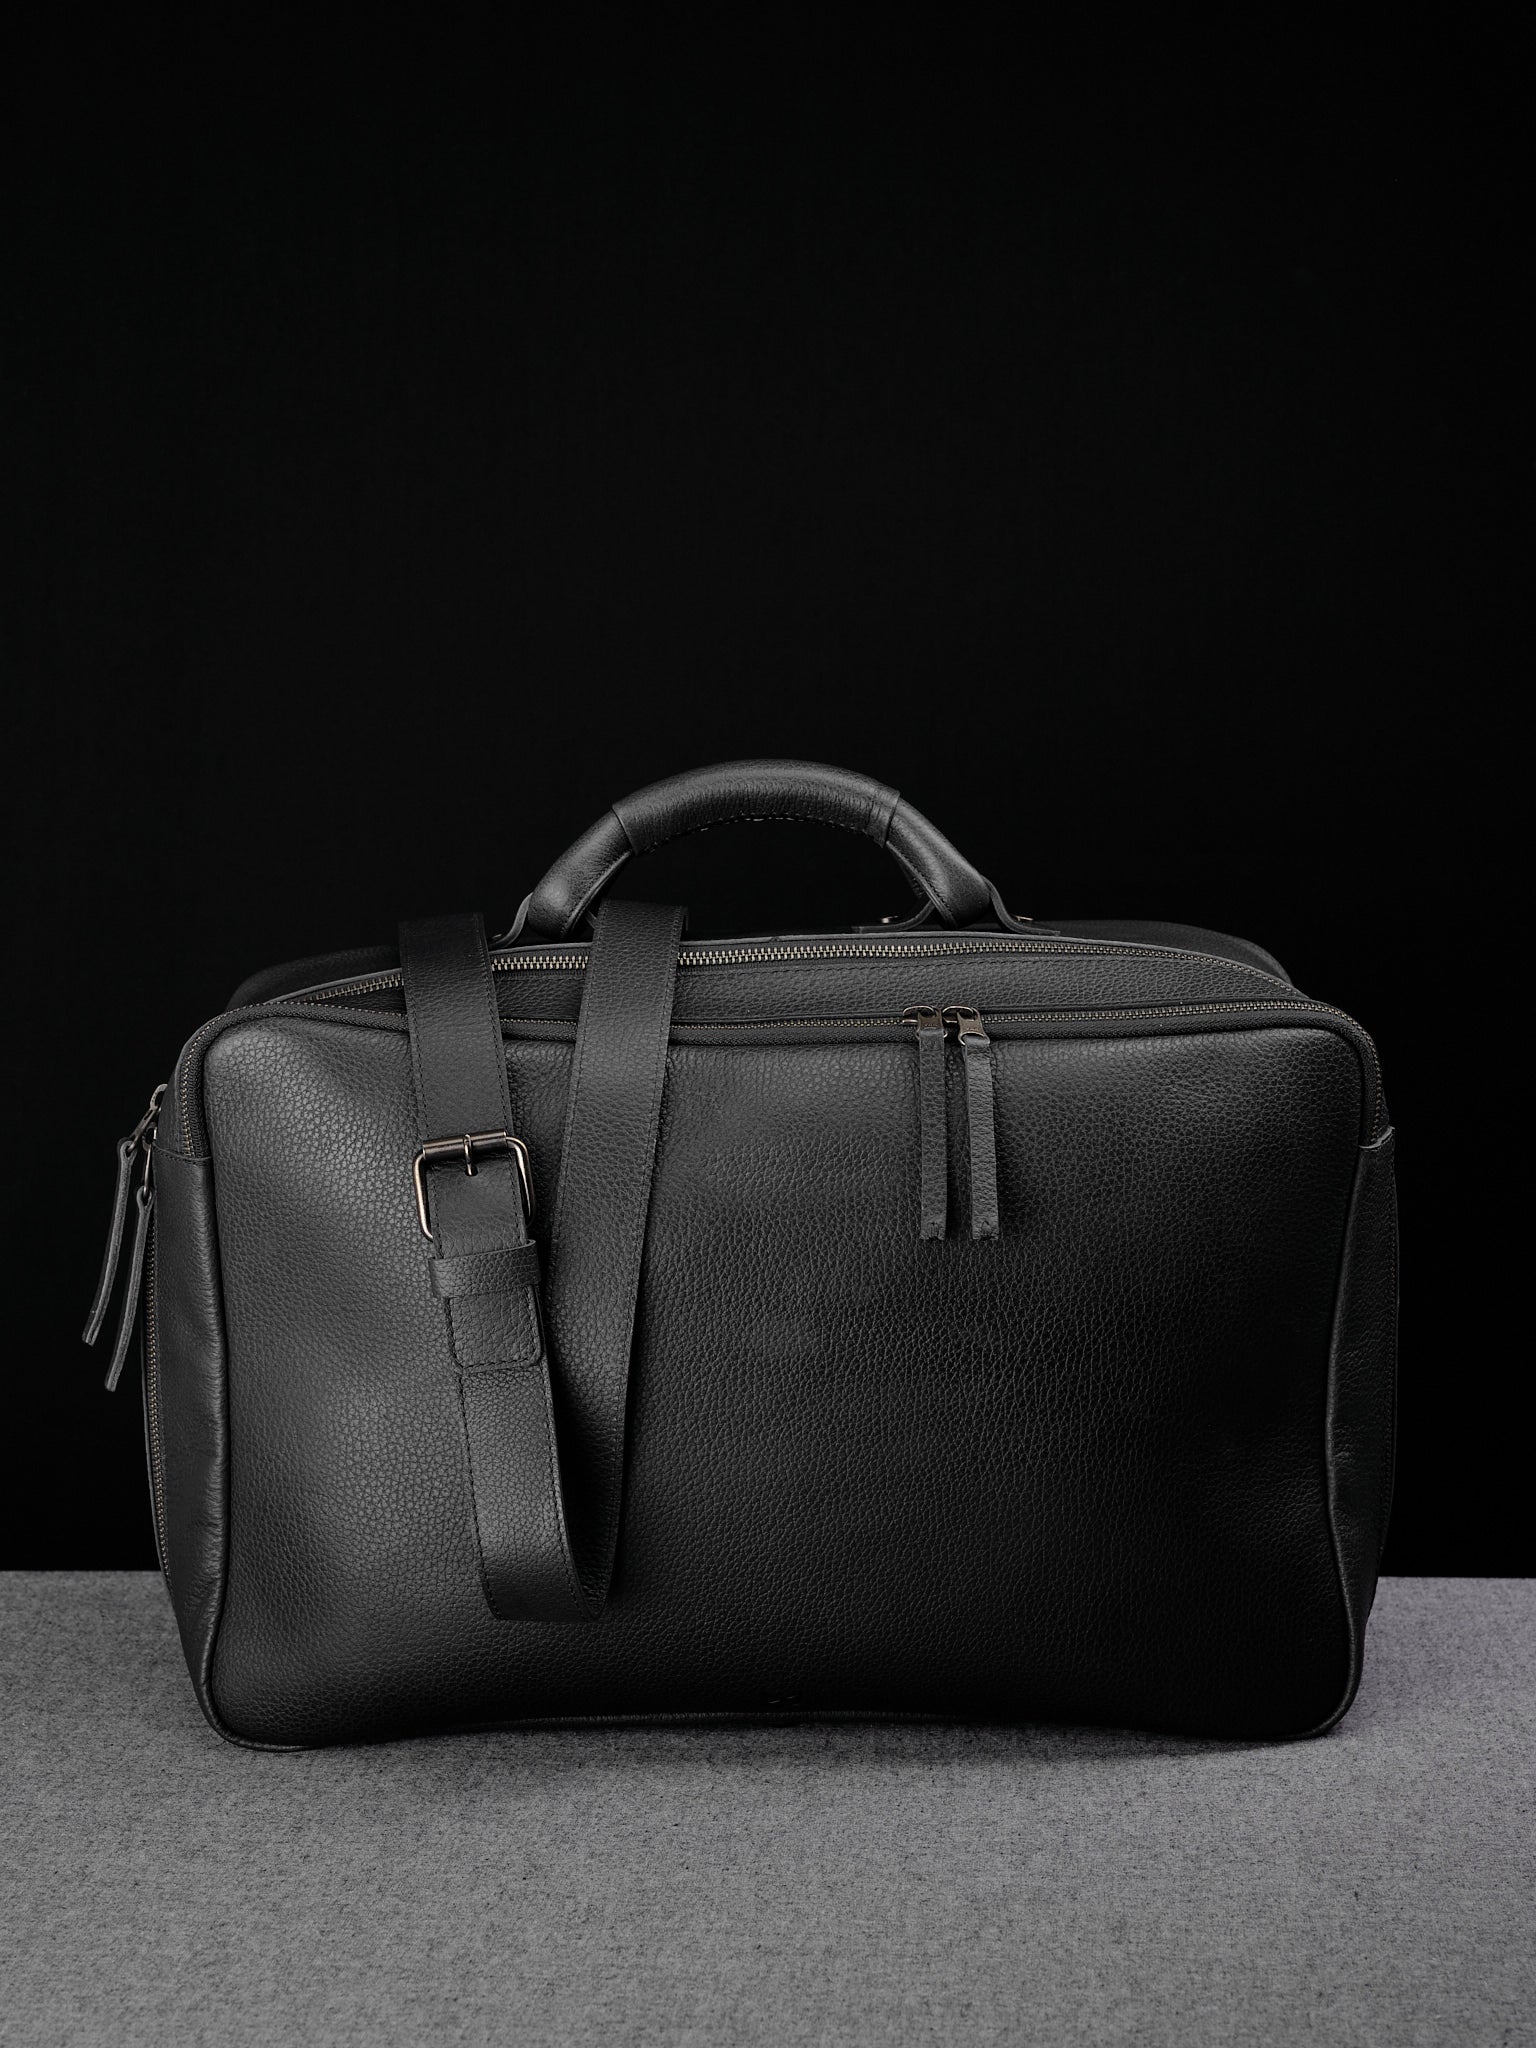 Detachable Shoulder Strap. Travel Duffle Bag. Leather Weekender Bag Black by Capra